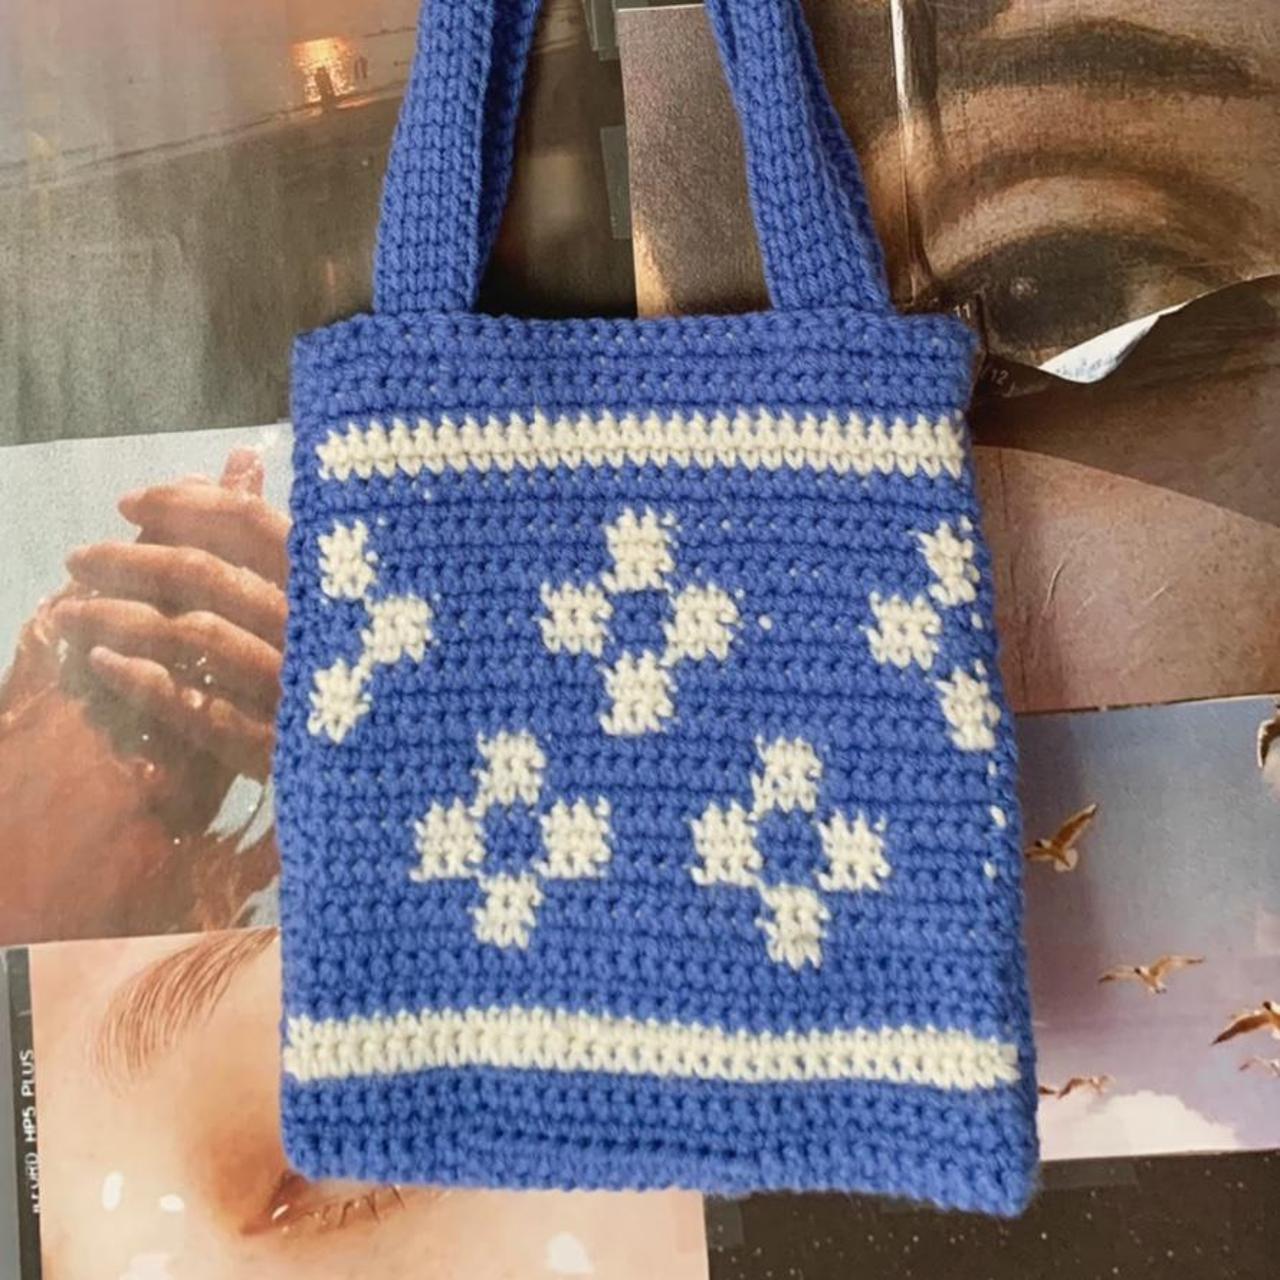 BLUE MODERN FLOWER BAG 💙 The perfect bag for a fun... - Depop